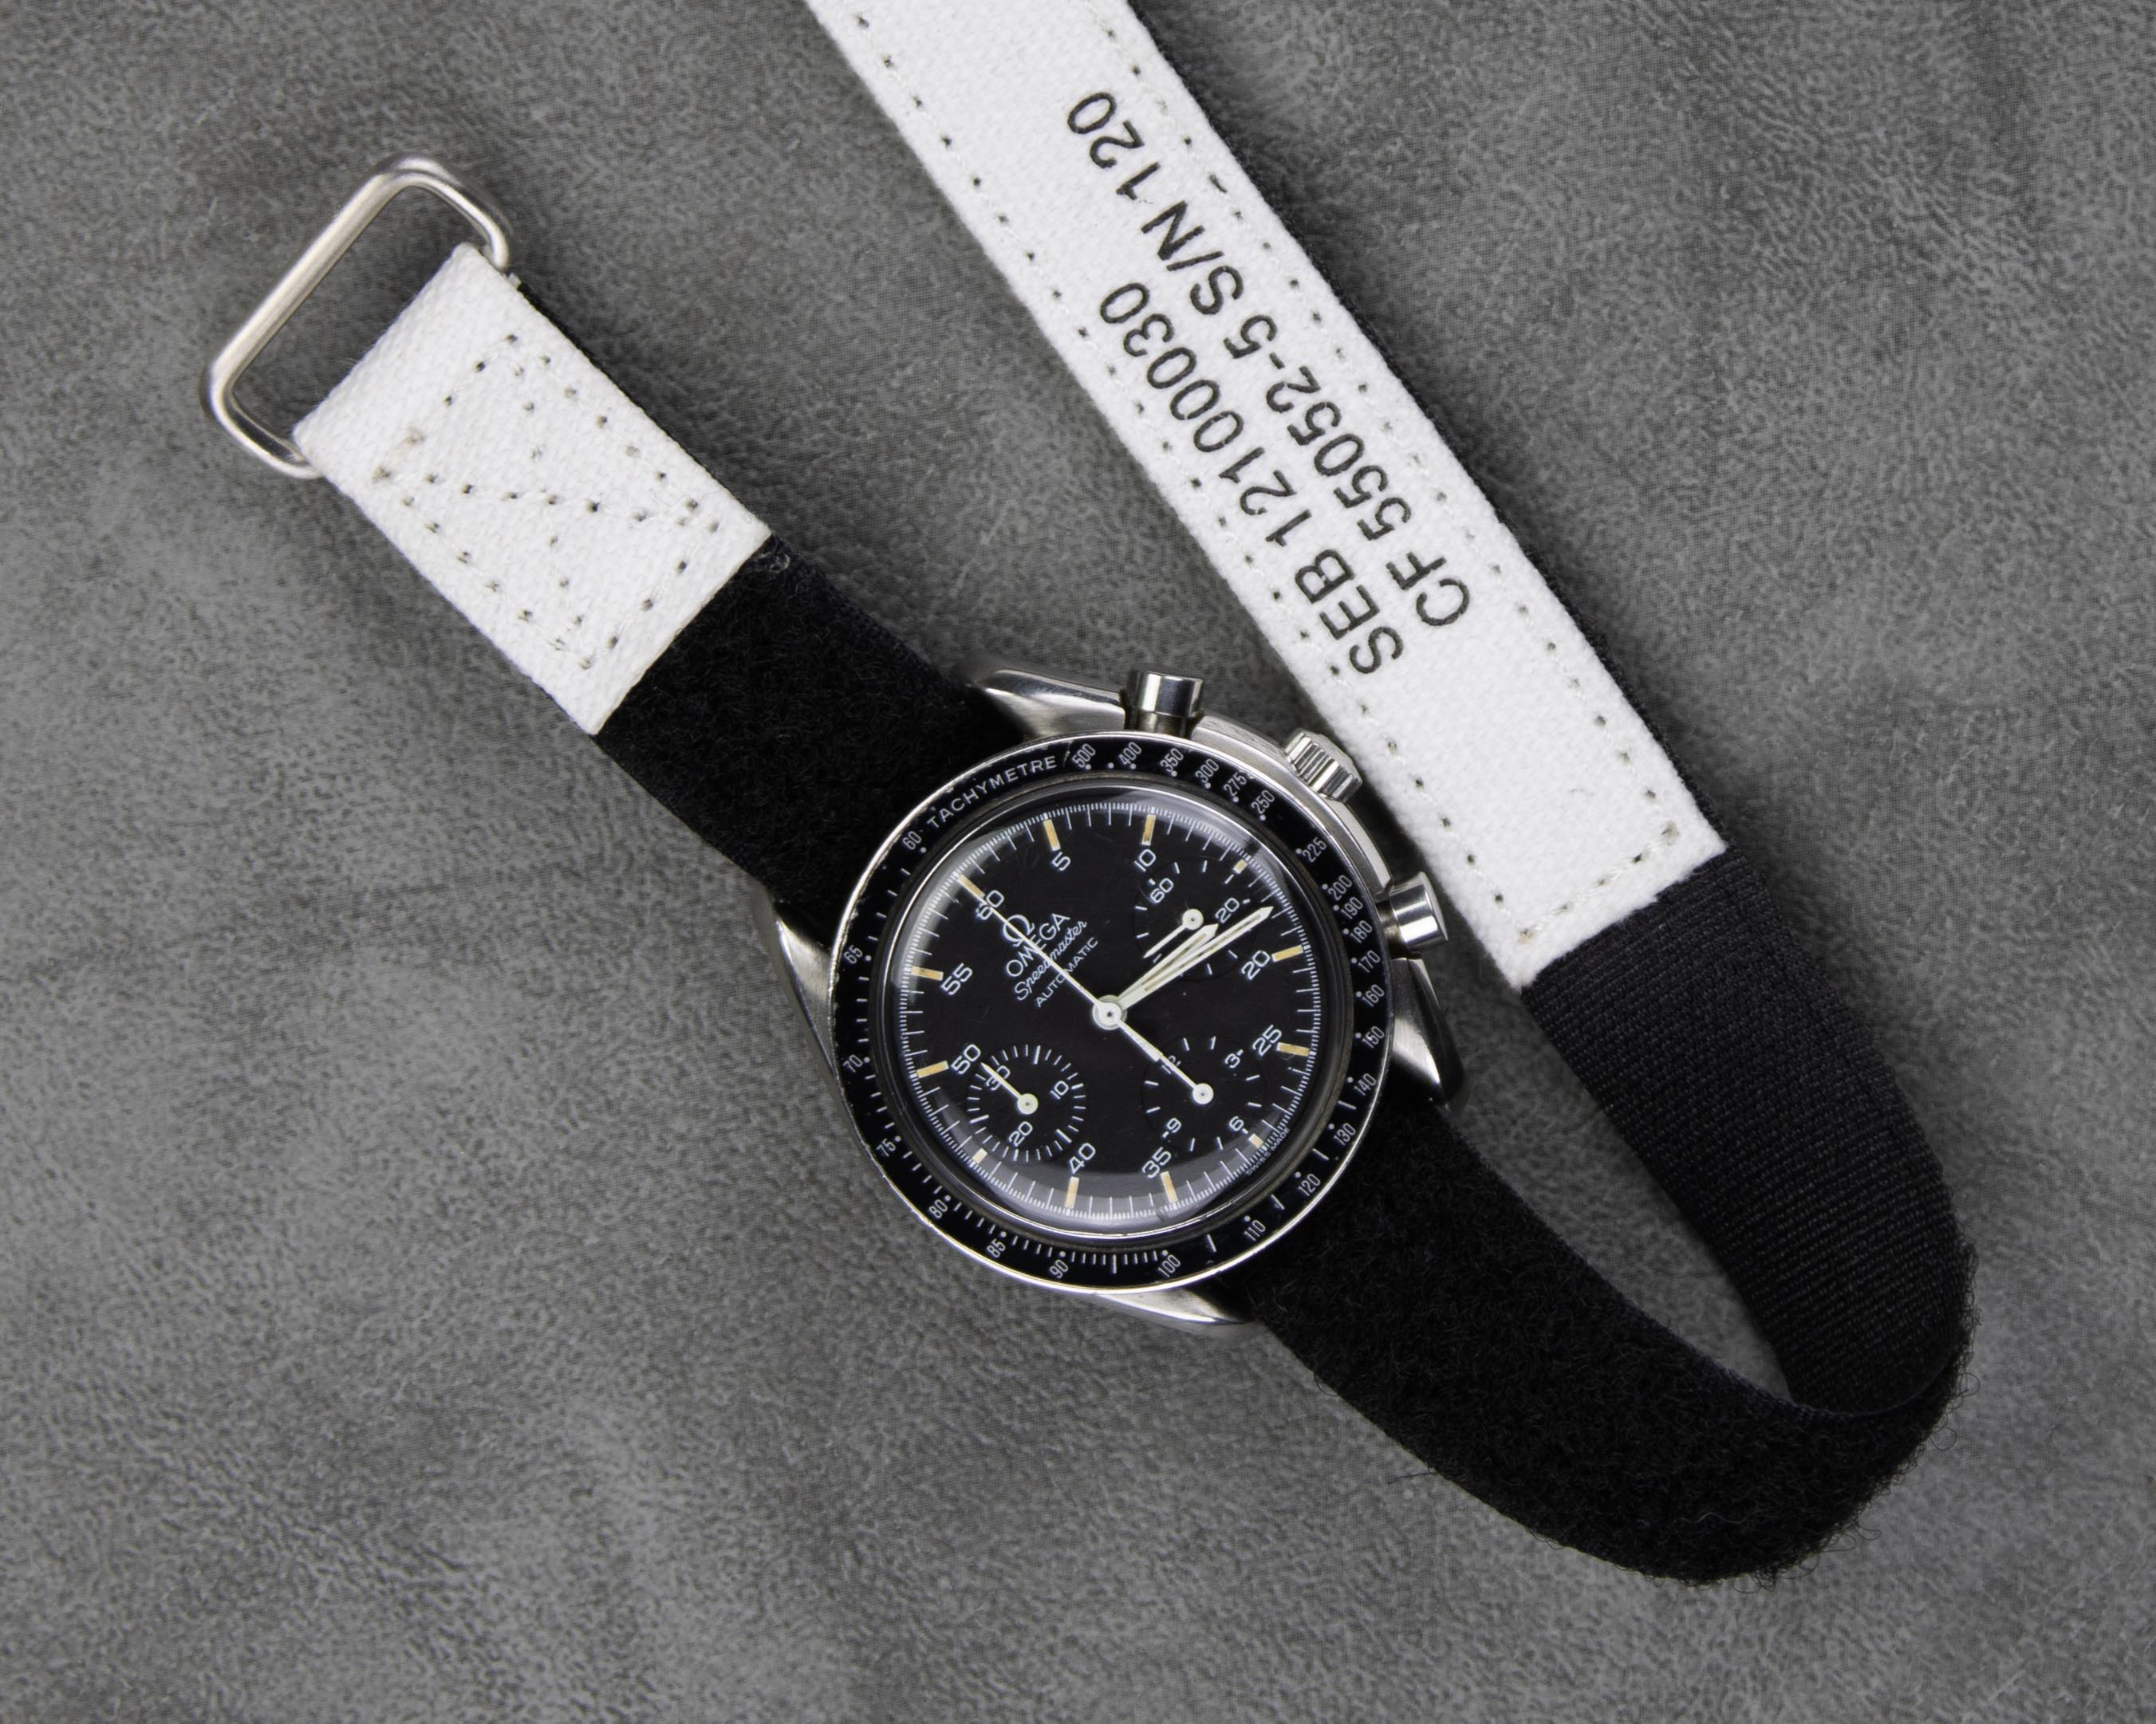 White canvas NASA velcro watch strap